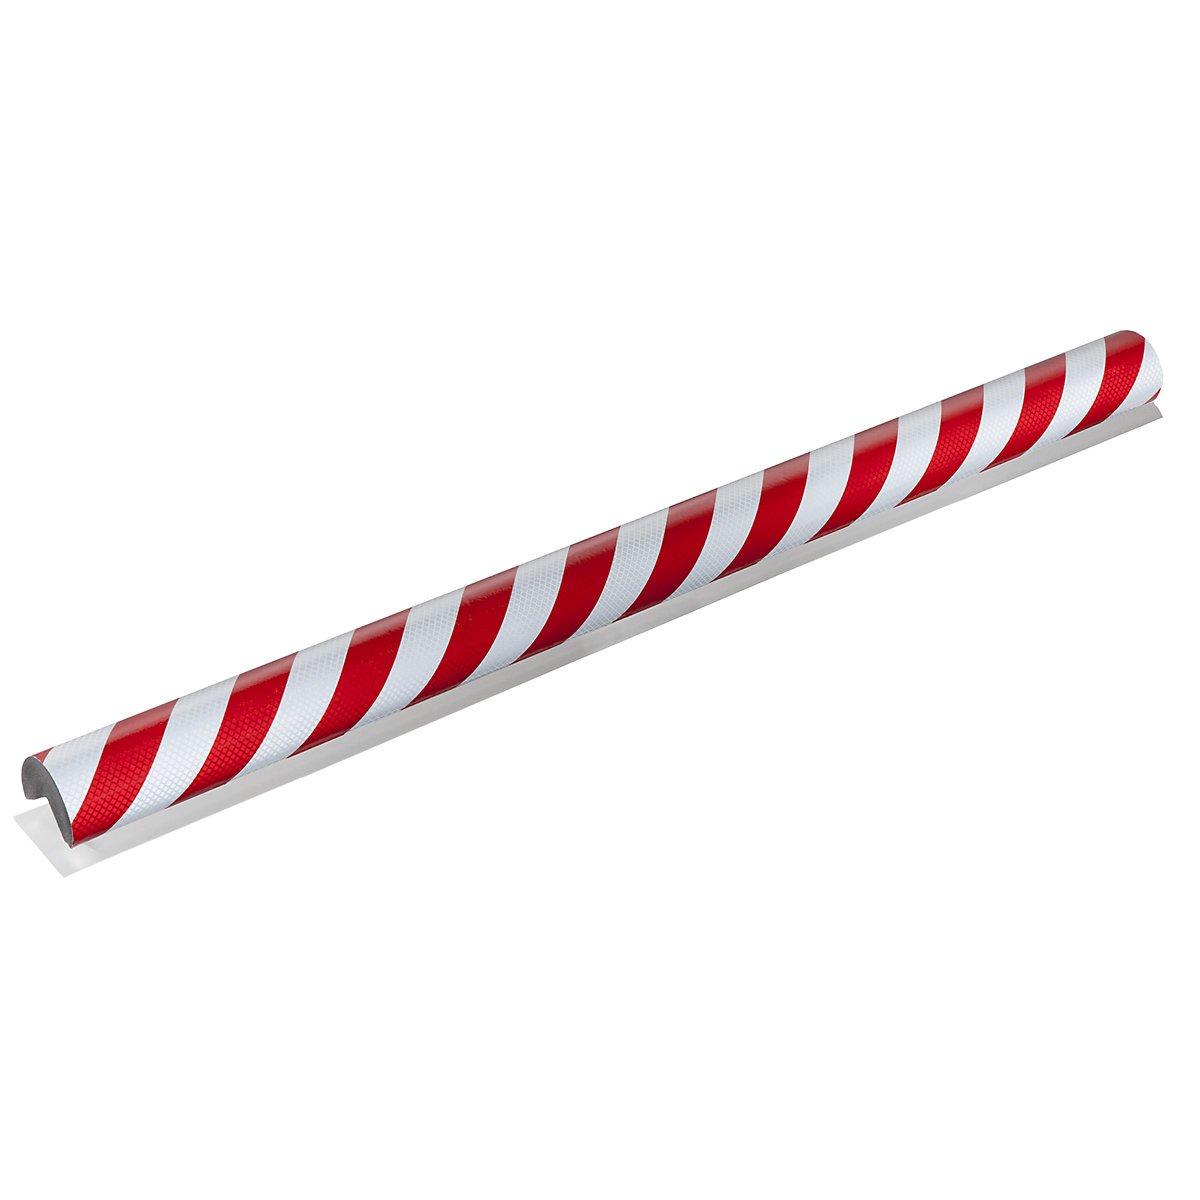 Knuffi®-hoekbescherming – SHG, type A+, stuk van 1 m, rood/wit reflecterend-14